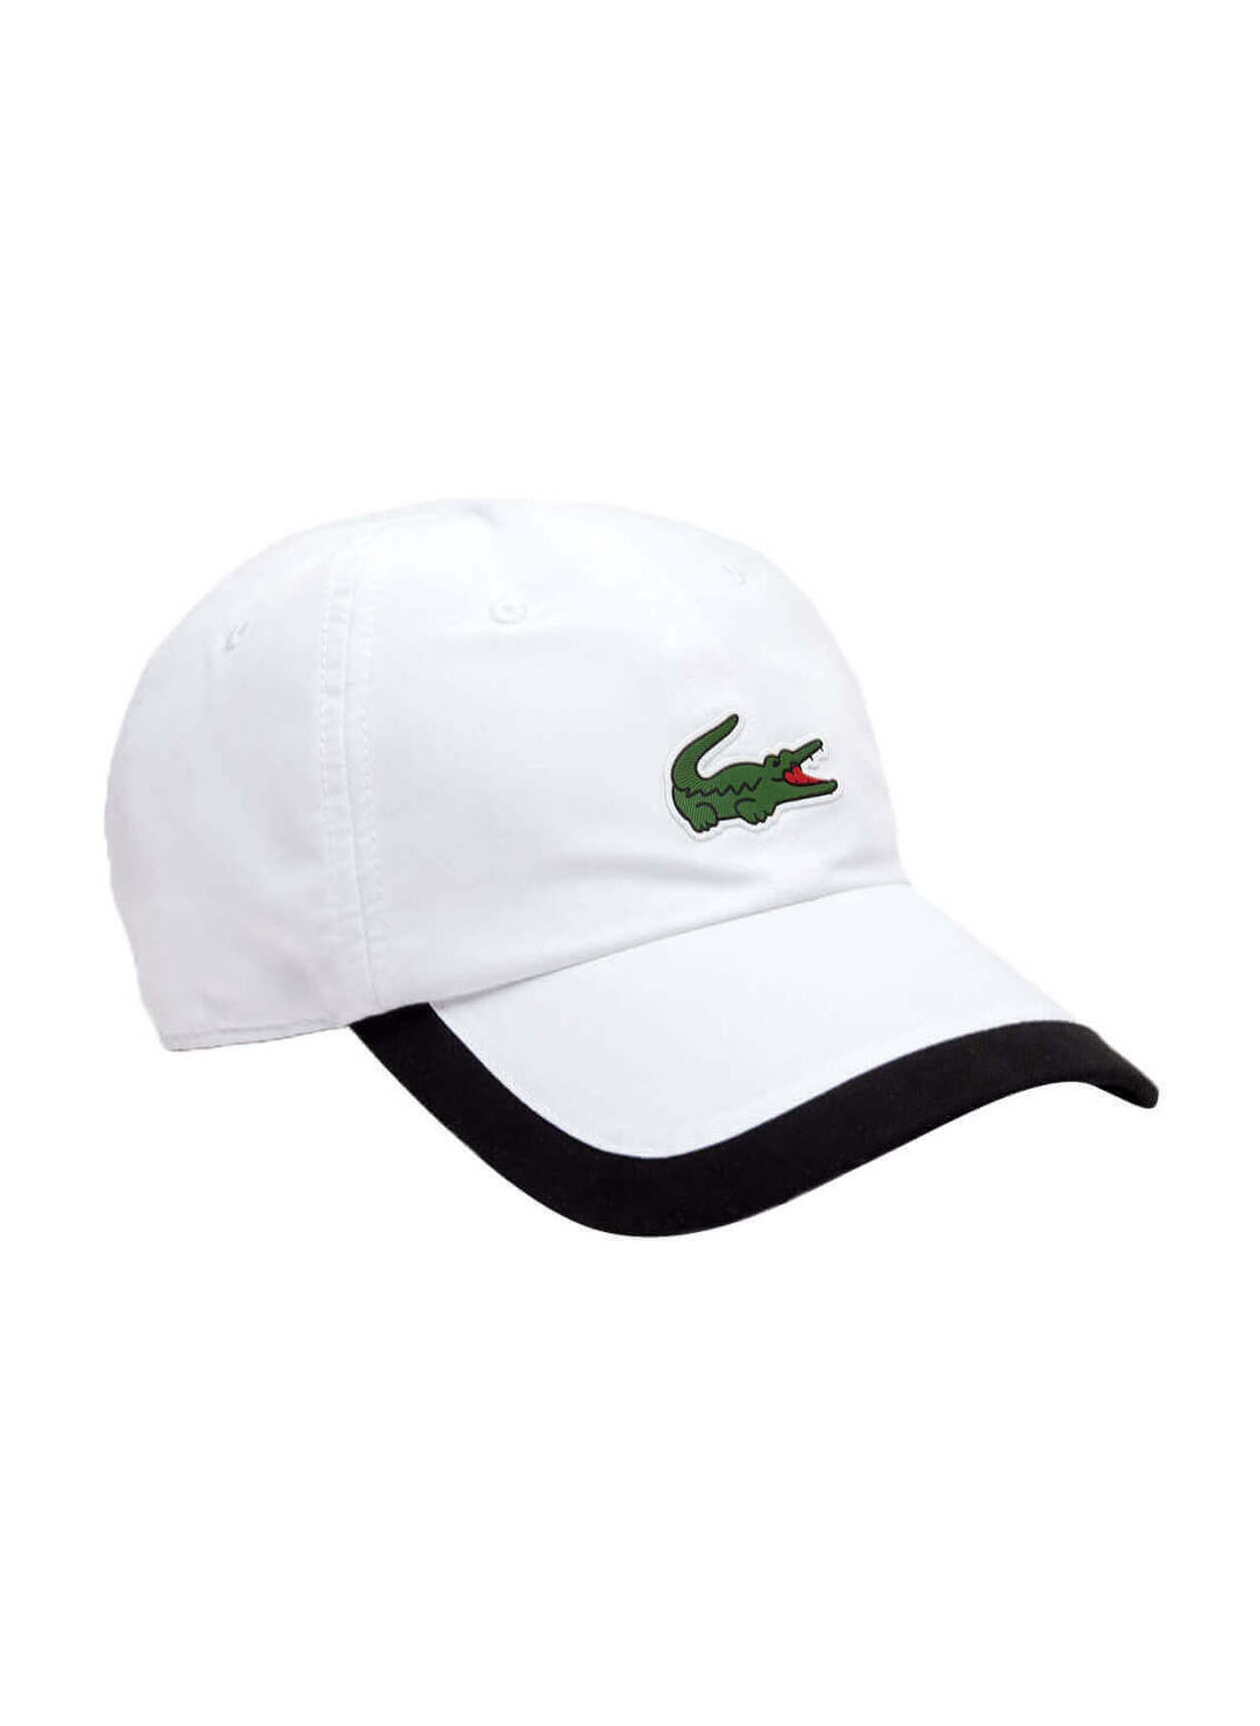 Lacoste White / Black Men's SPORT Contrast Border Lightweight Hat